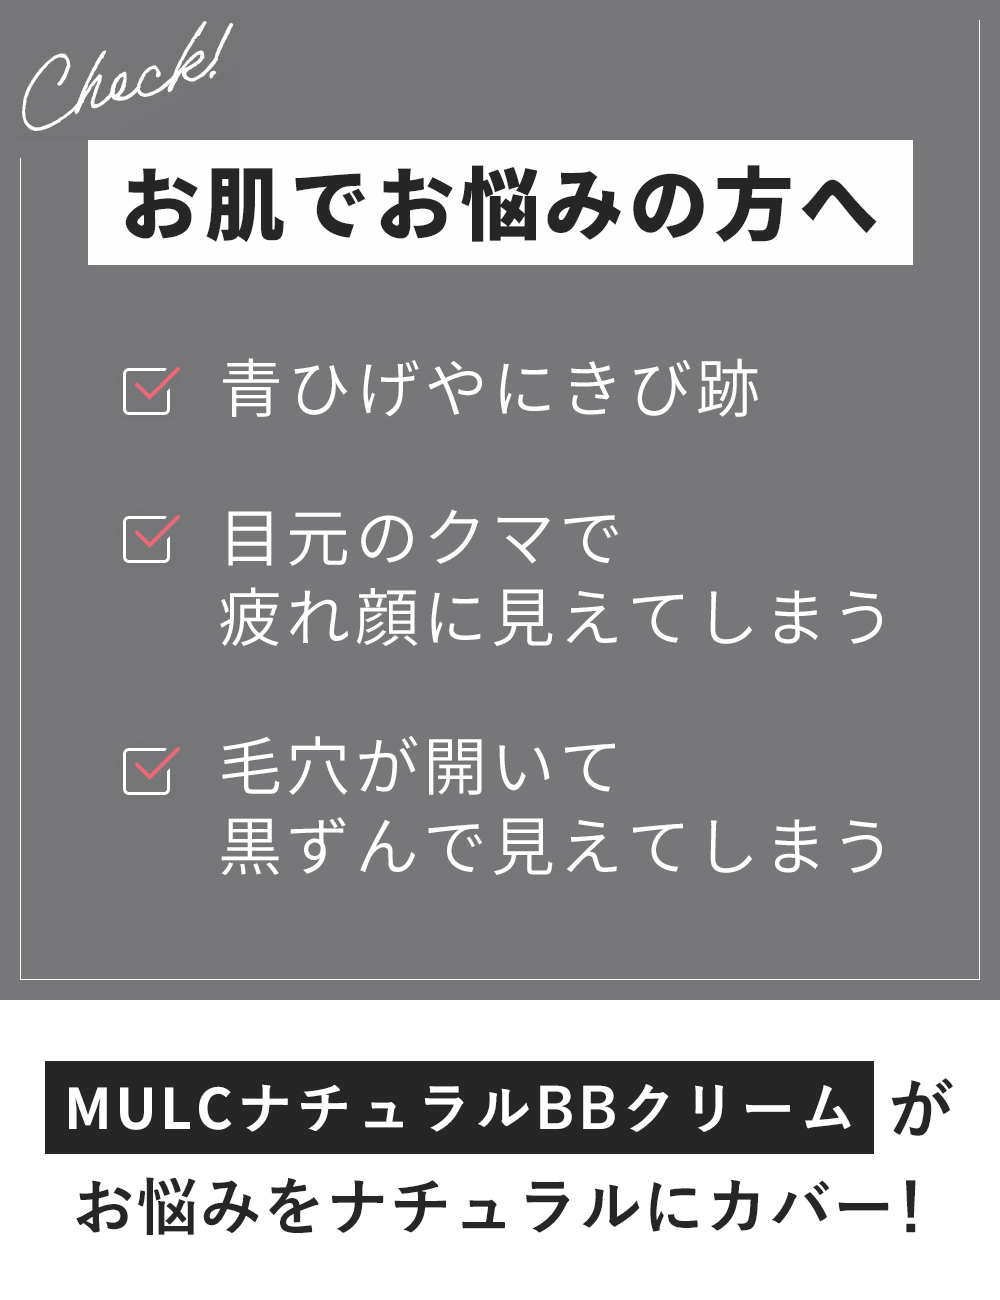 MULC ナチュラルBBクリーム - MULCオンラインショップ